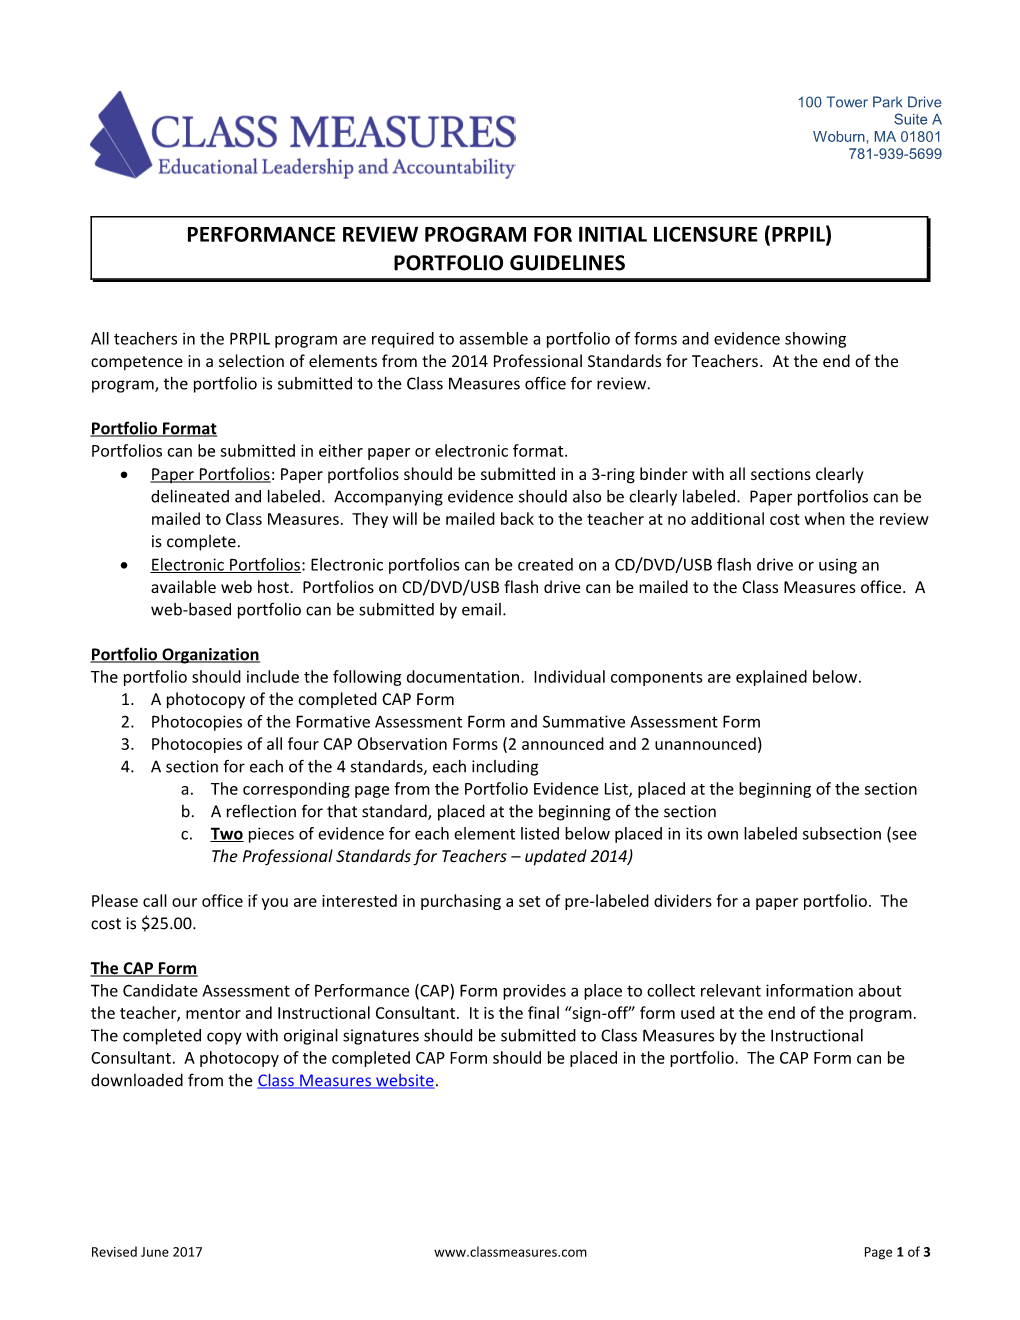 Performance Review Program for Initial Licensure (Prpil)